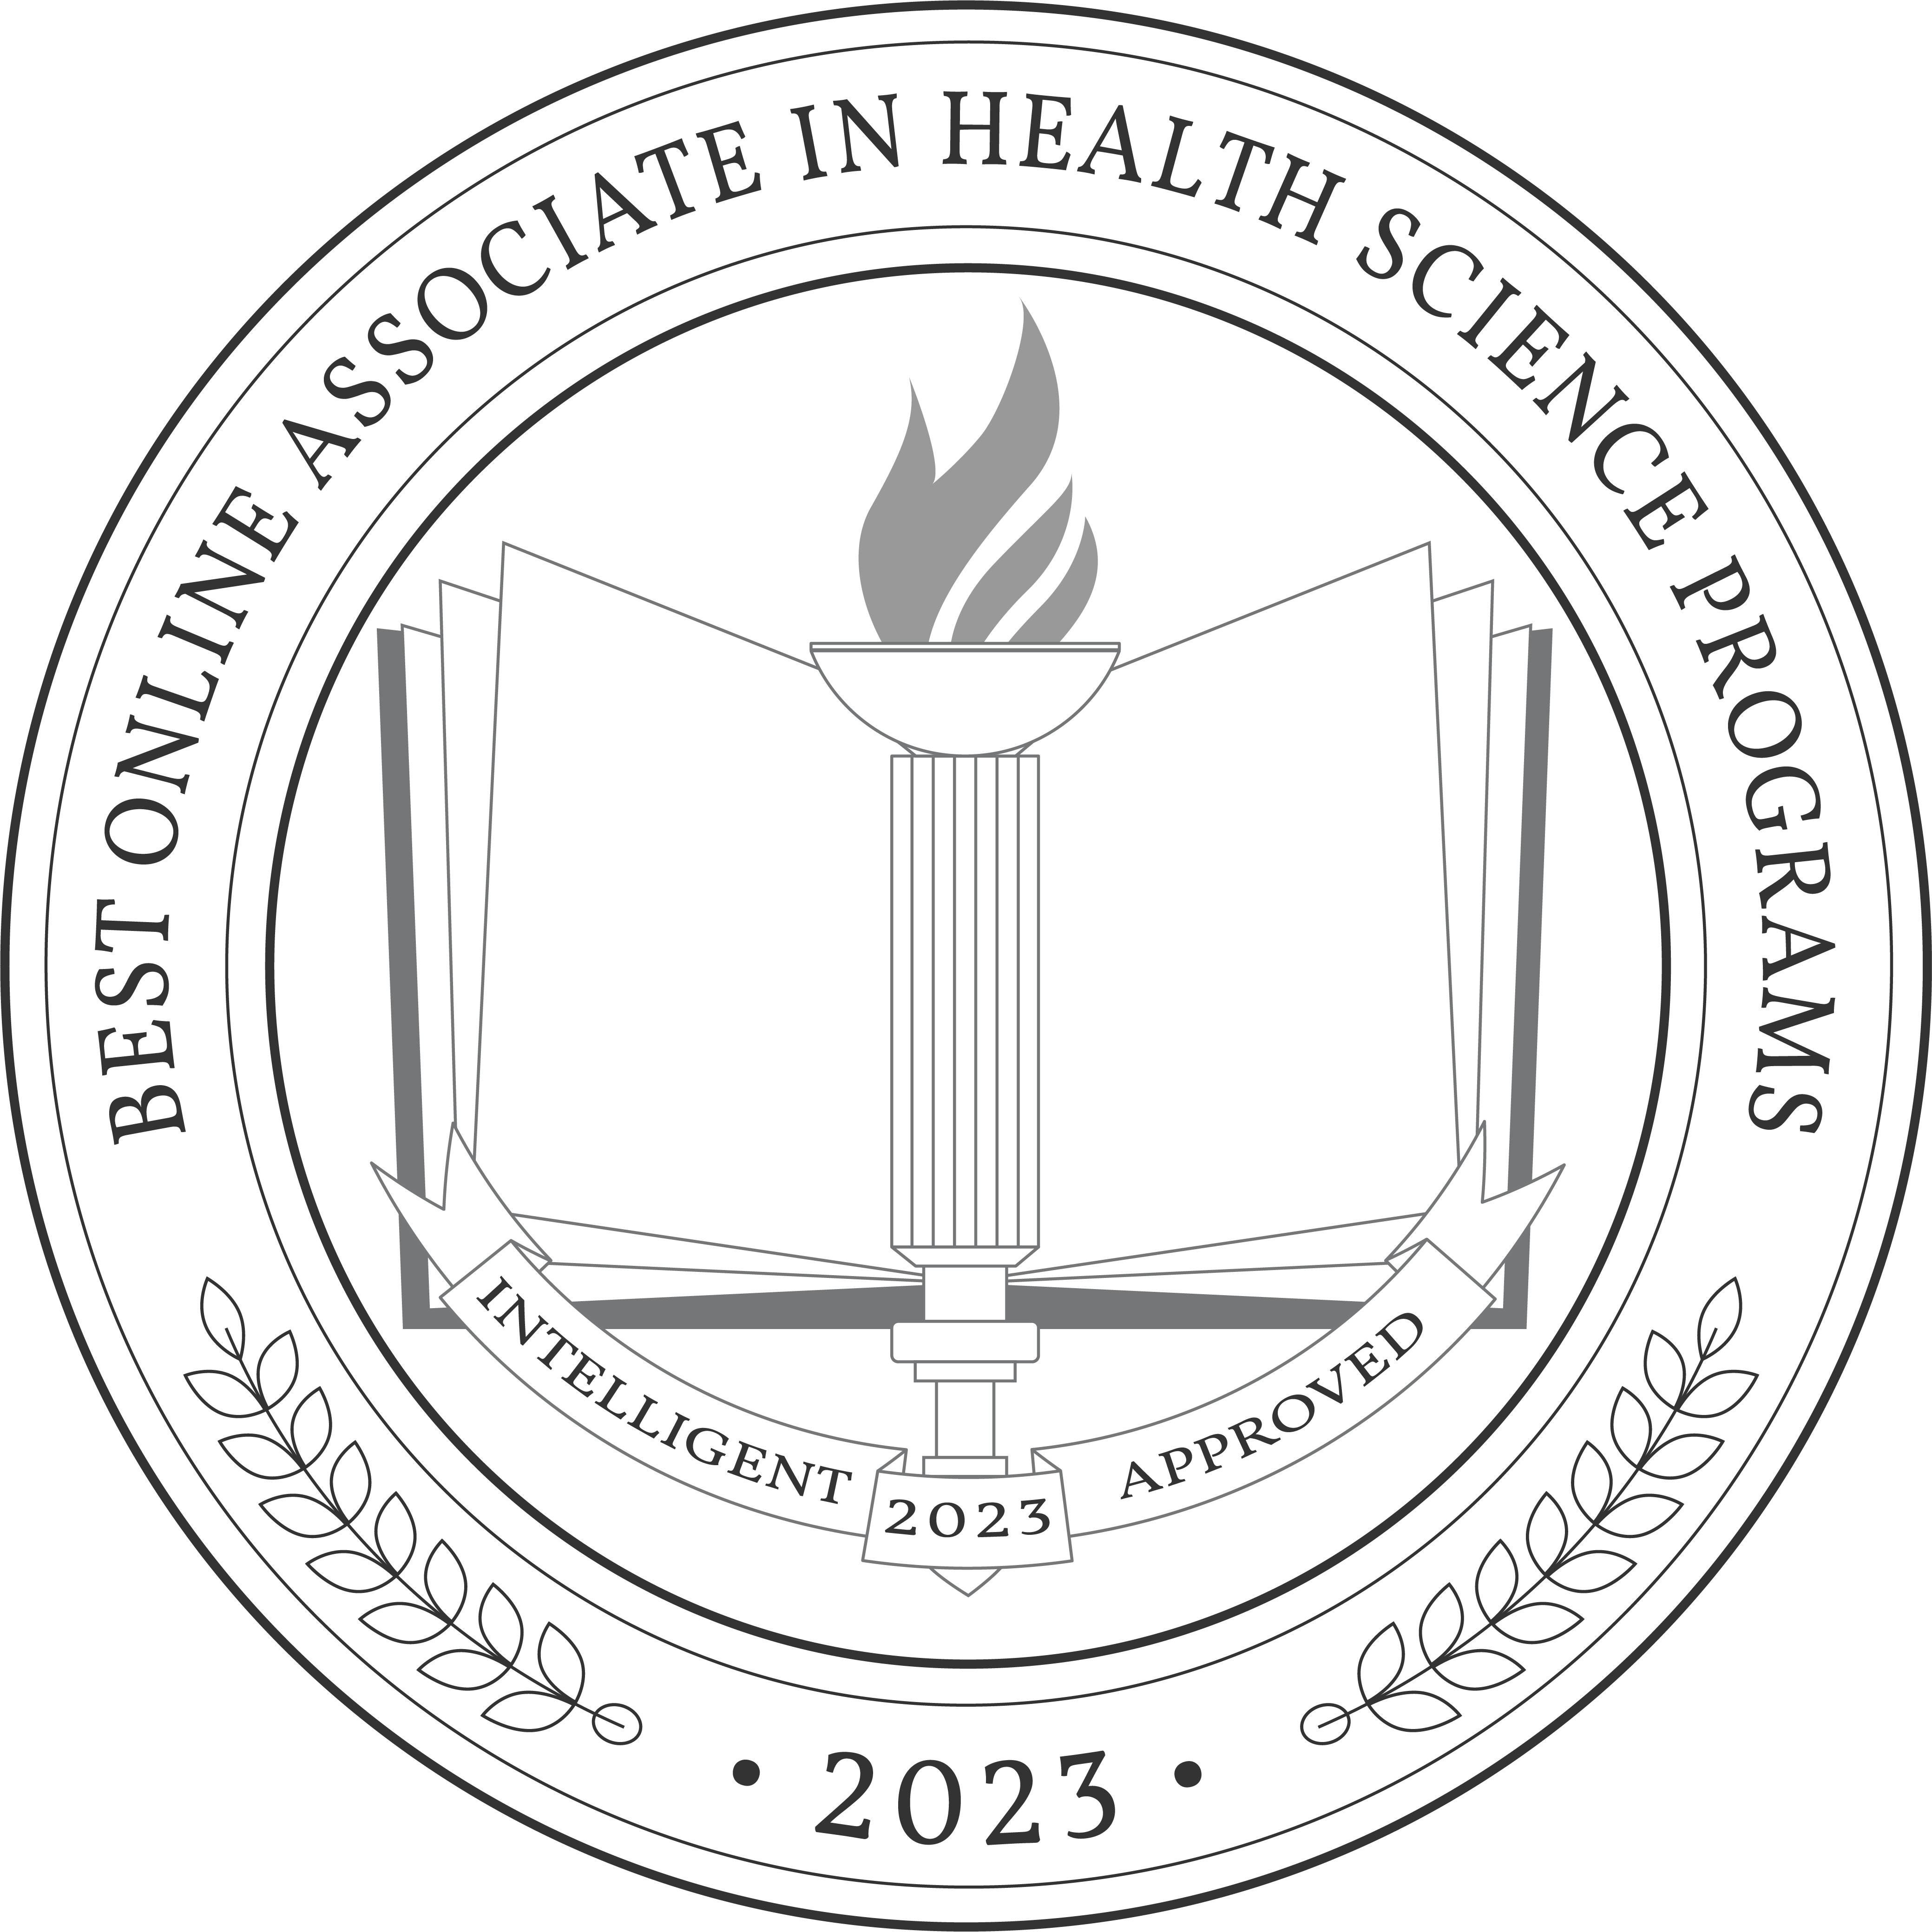 Best Online Associate in Health Science Programs badge